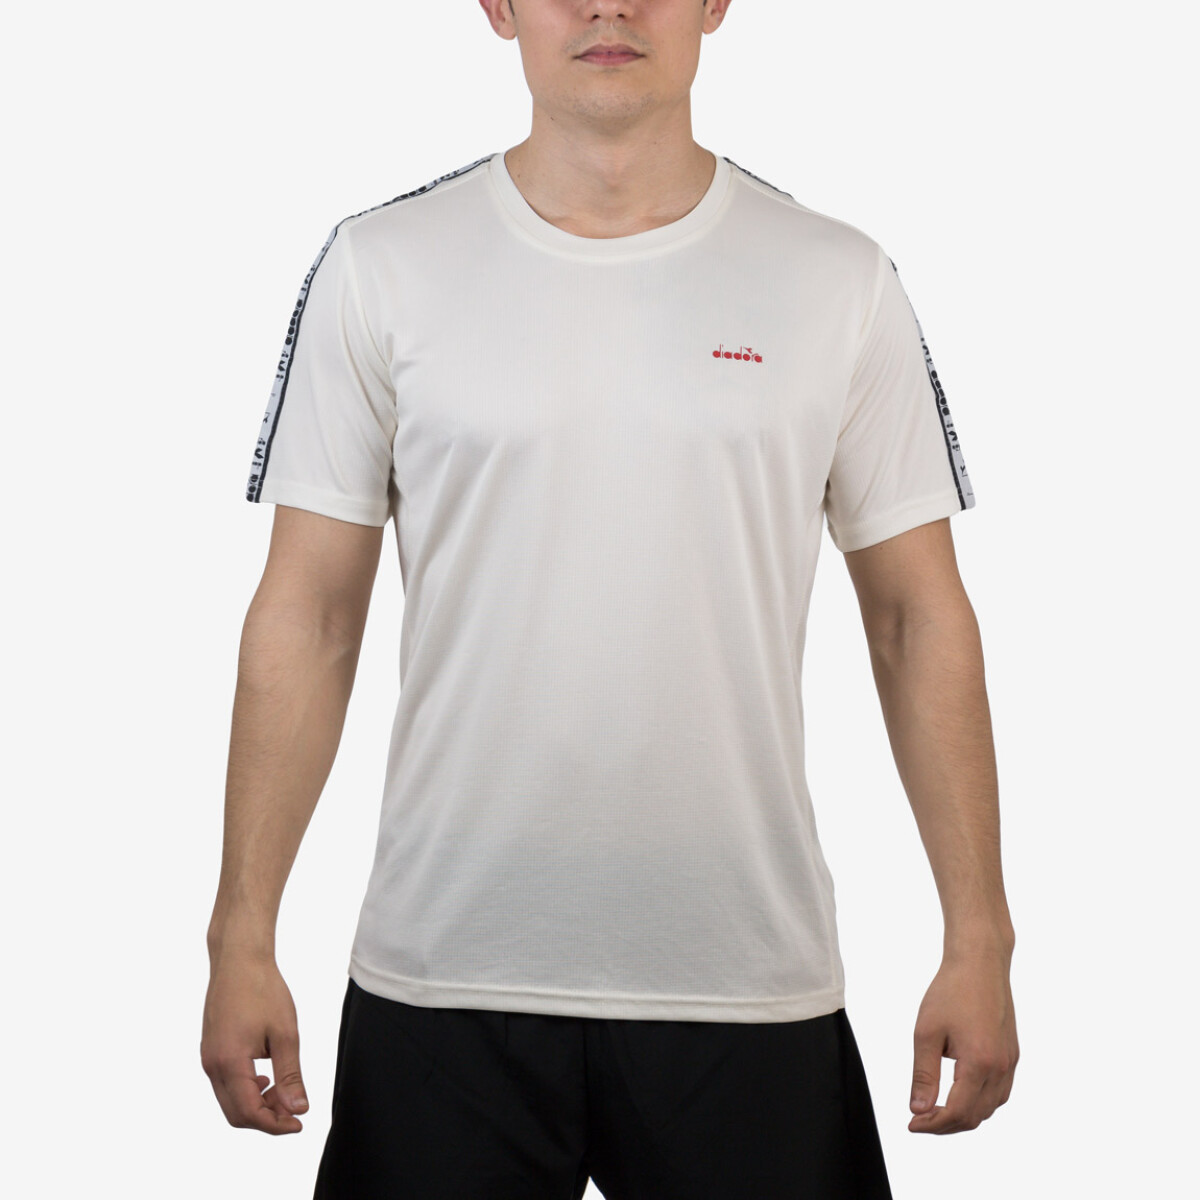 Diadora Hombre T-shirt - White - Blanco 